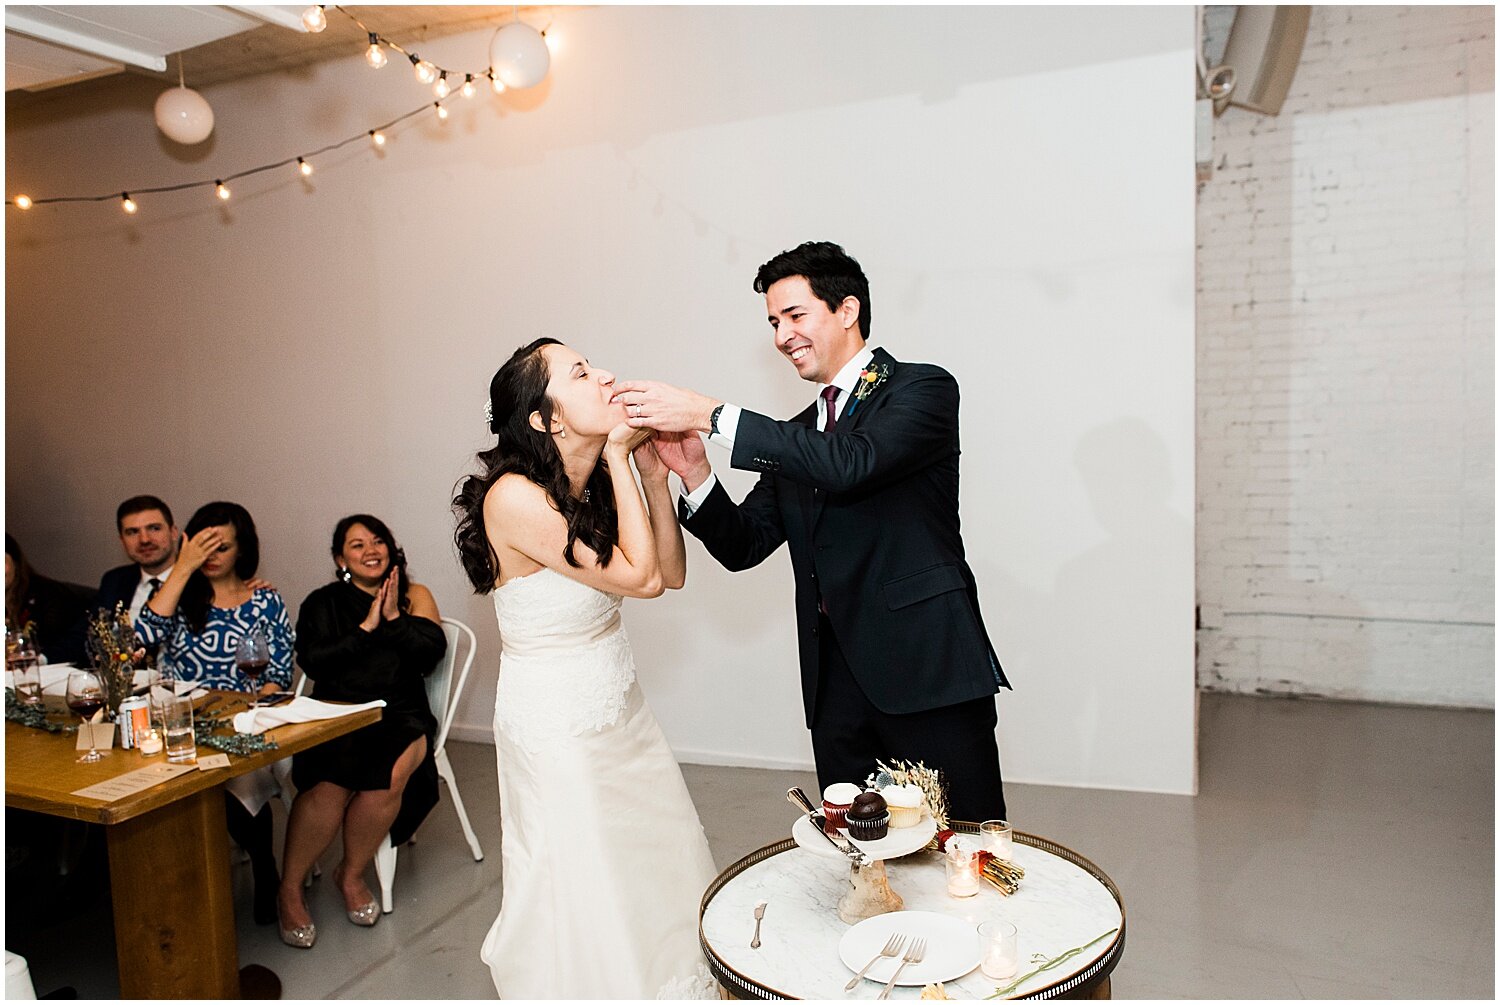 Havens-Kitchen-Wedding-Venue-NYC-Apollo-Fields-Weddings-Photographers-New-York-City-100.jpg